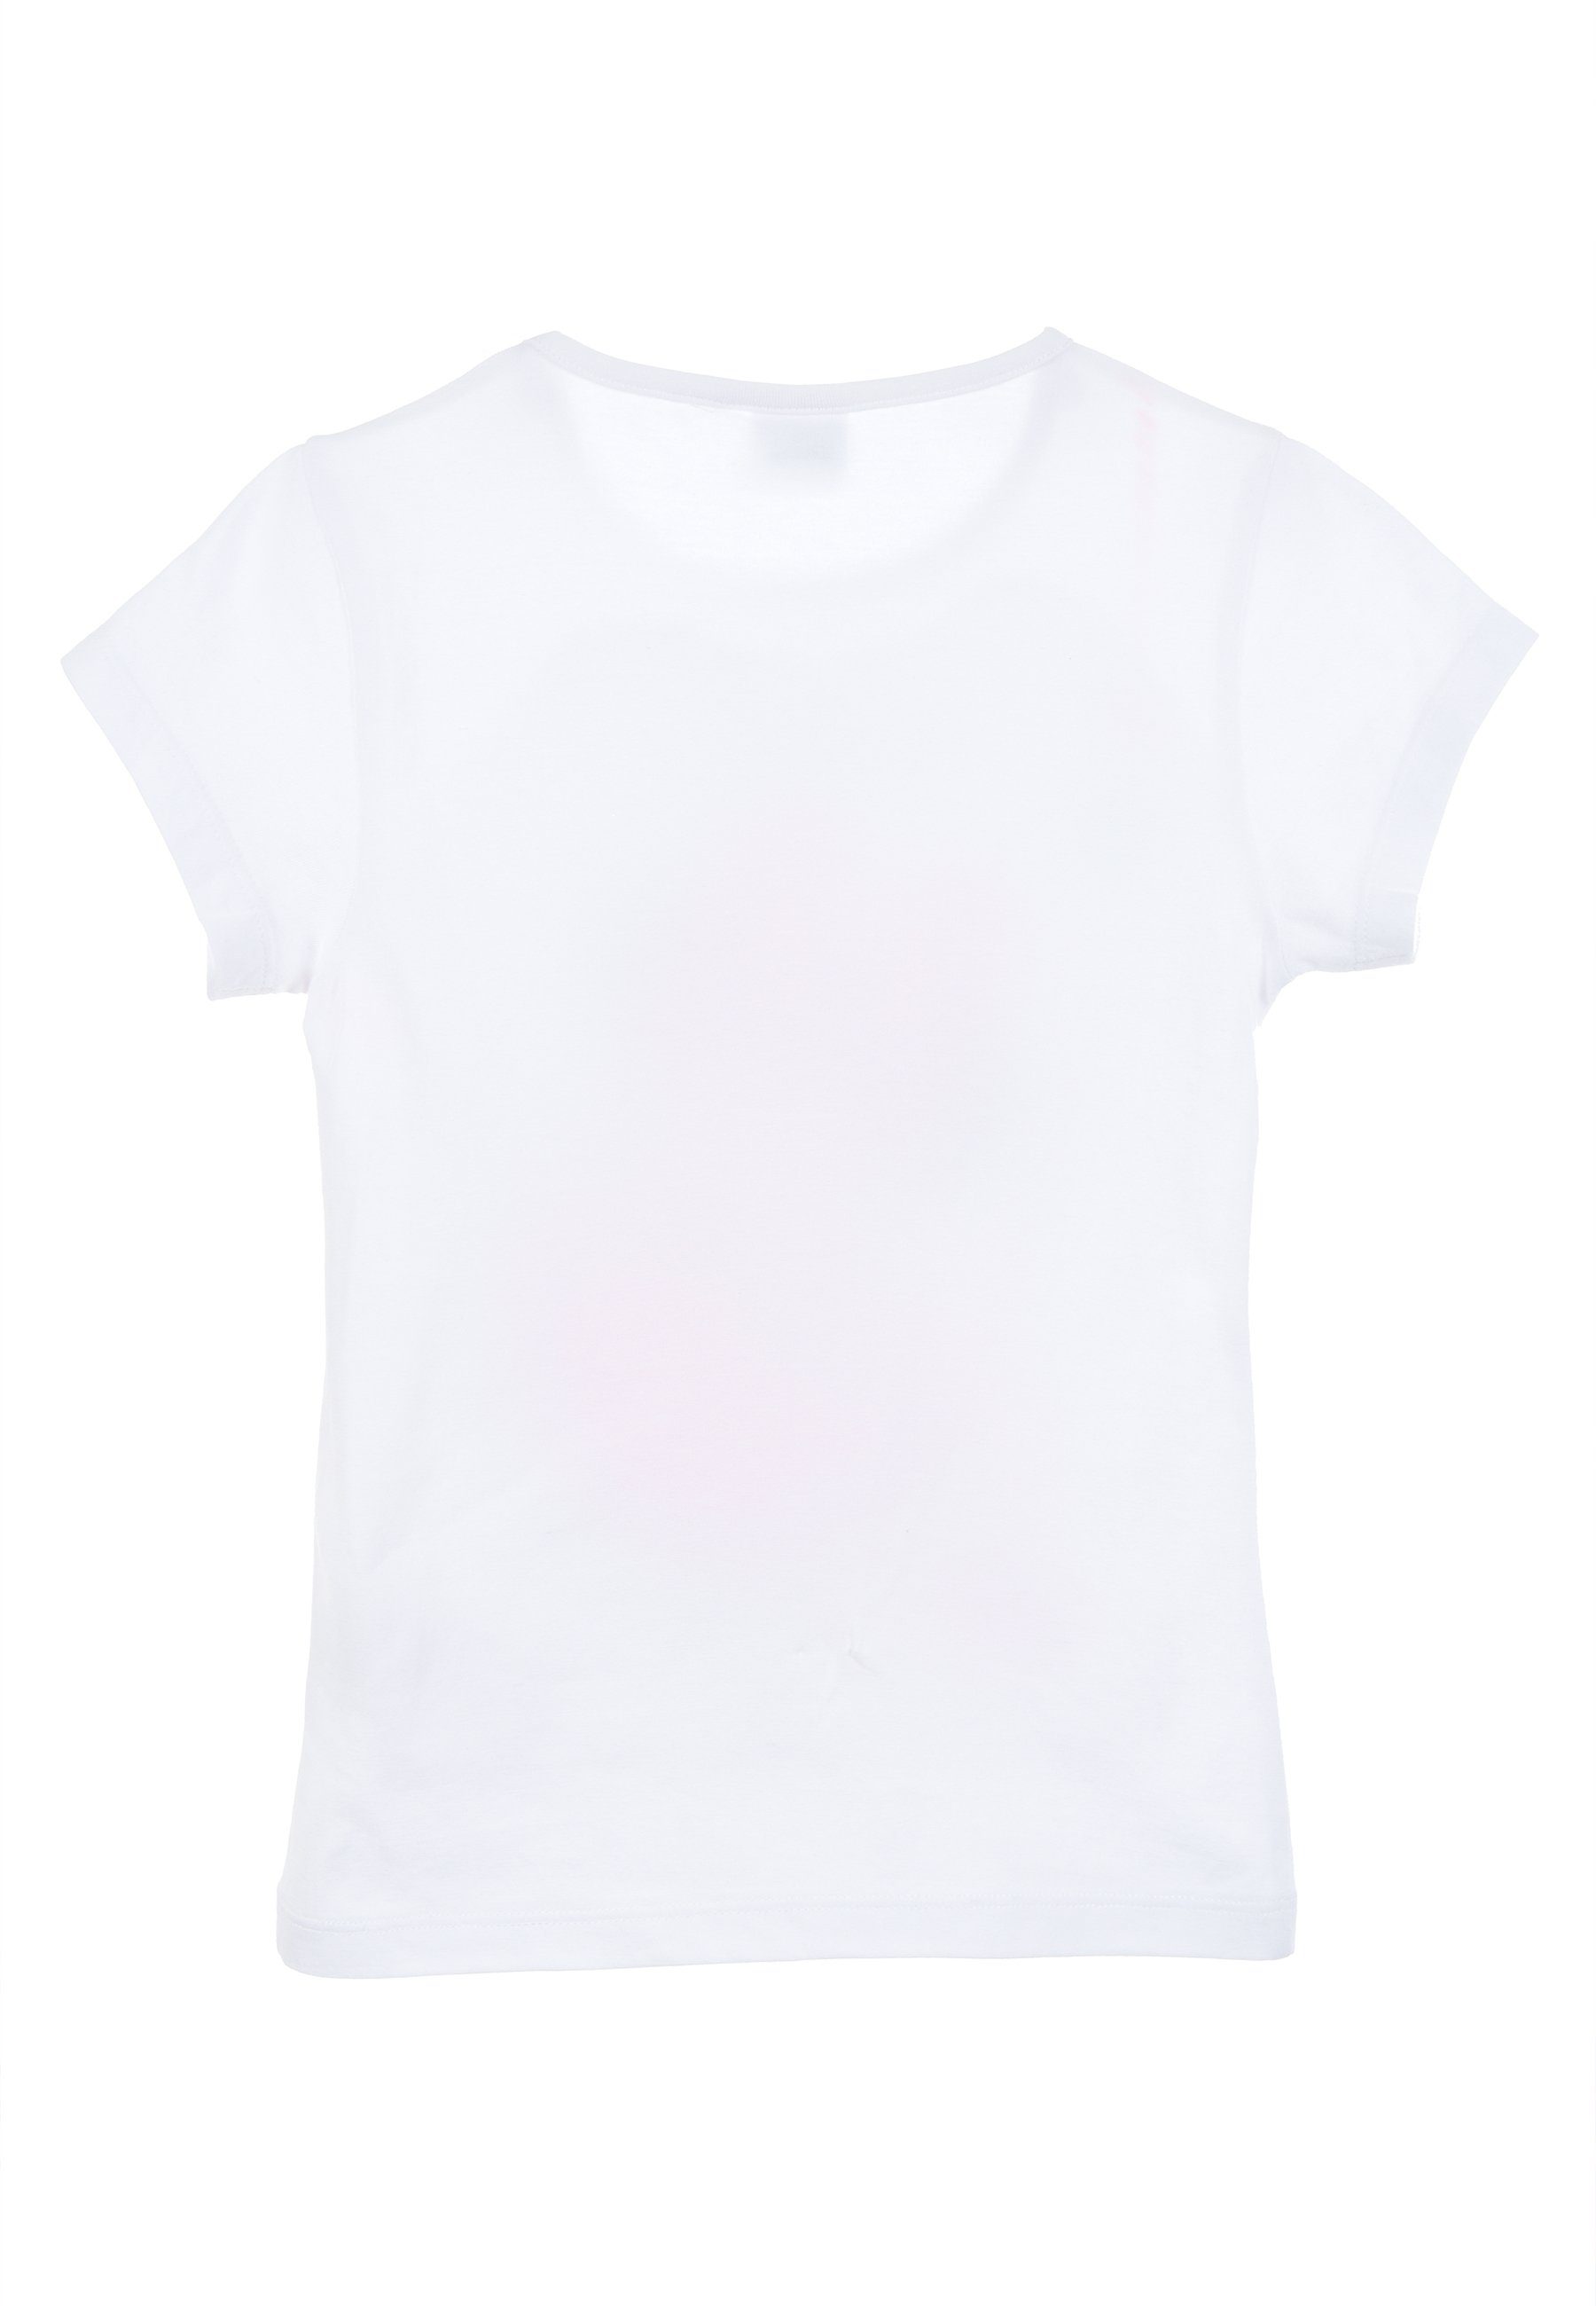 Kinder Mouse Disney Minnie Weiß Kurzarm-Shirt Oberteil Mädchen T-Shirt Sommer